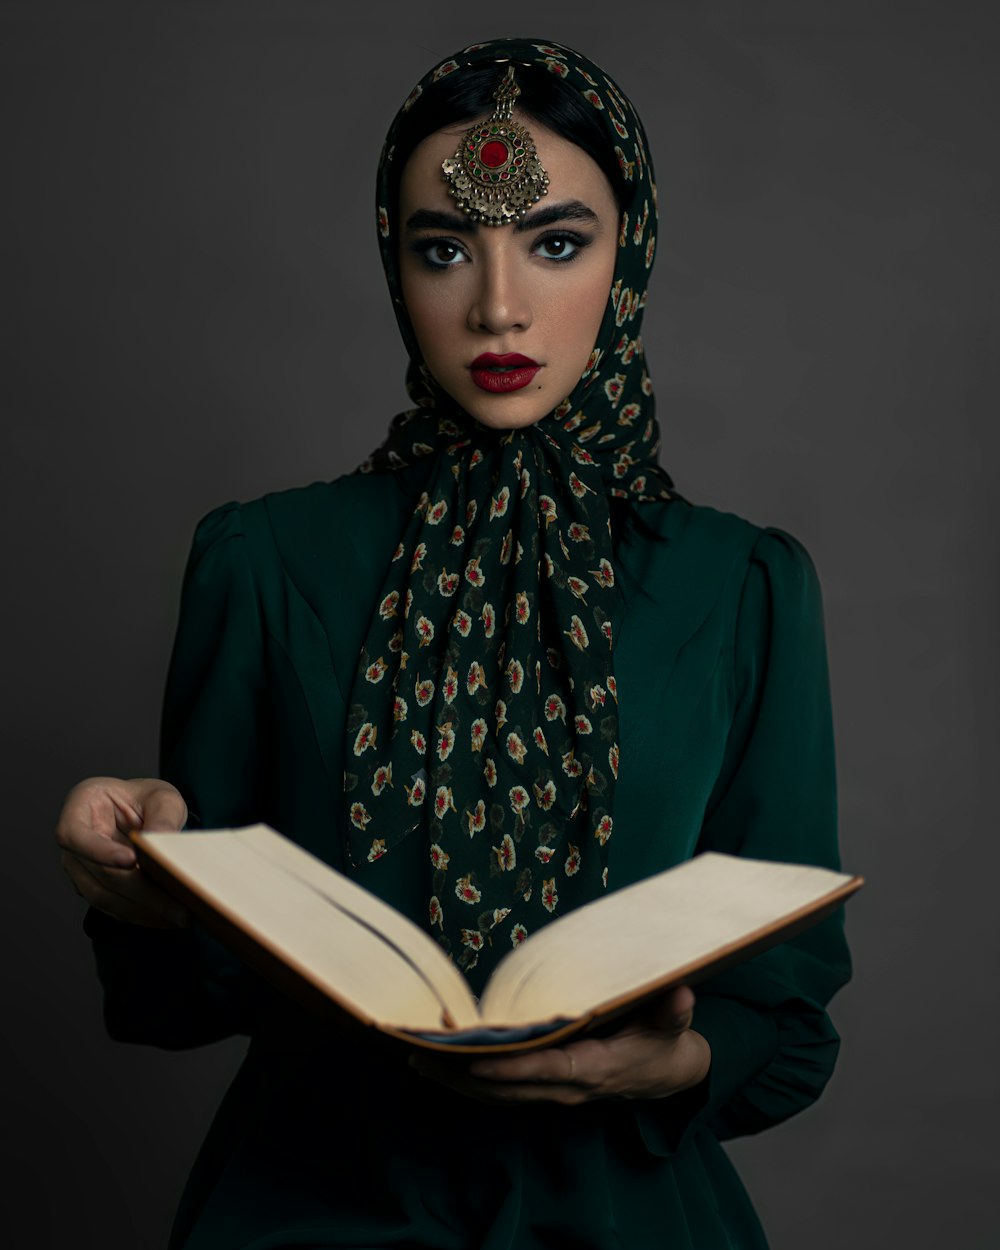 Une femme en robe verte tient un livre